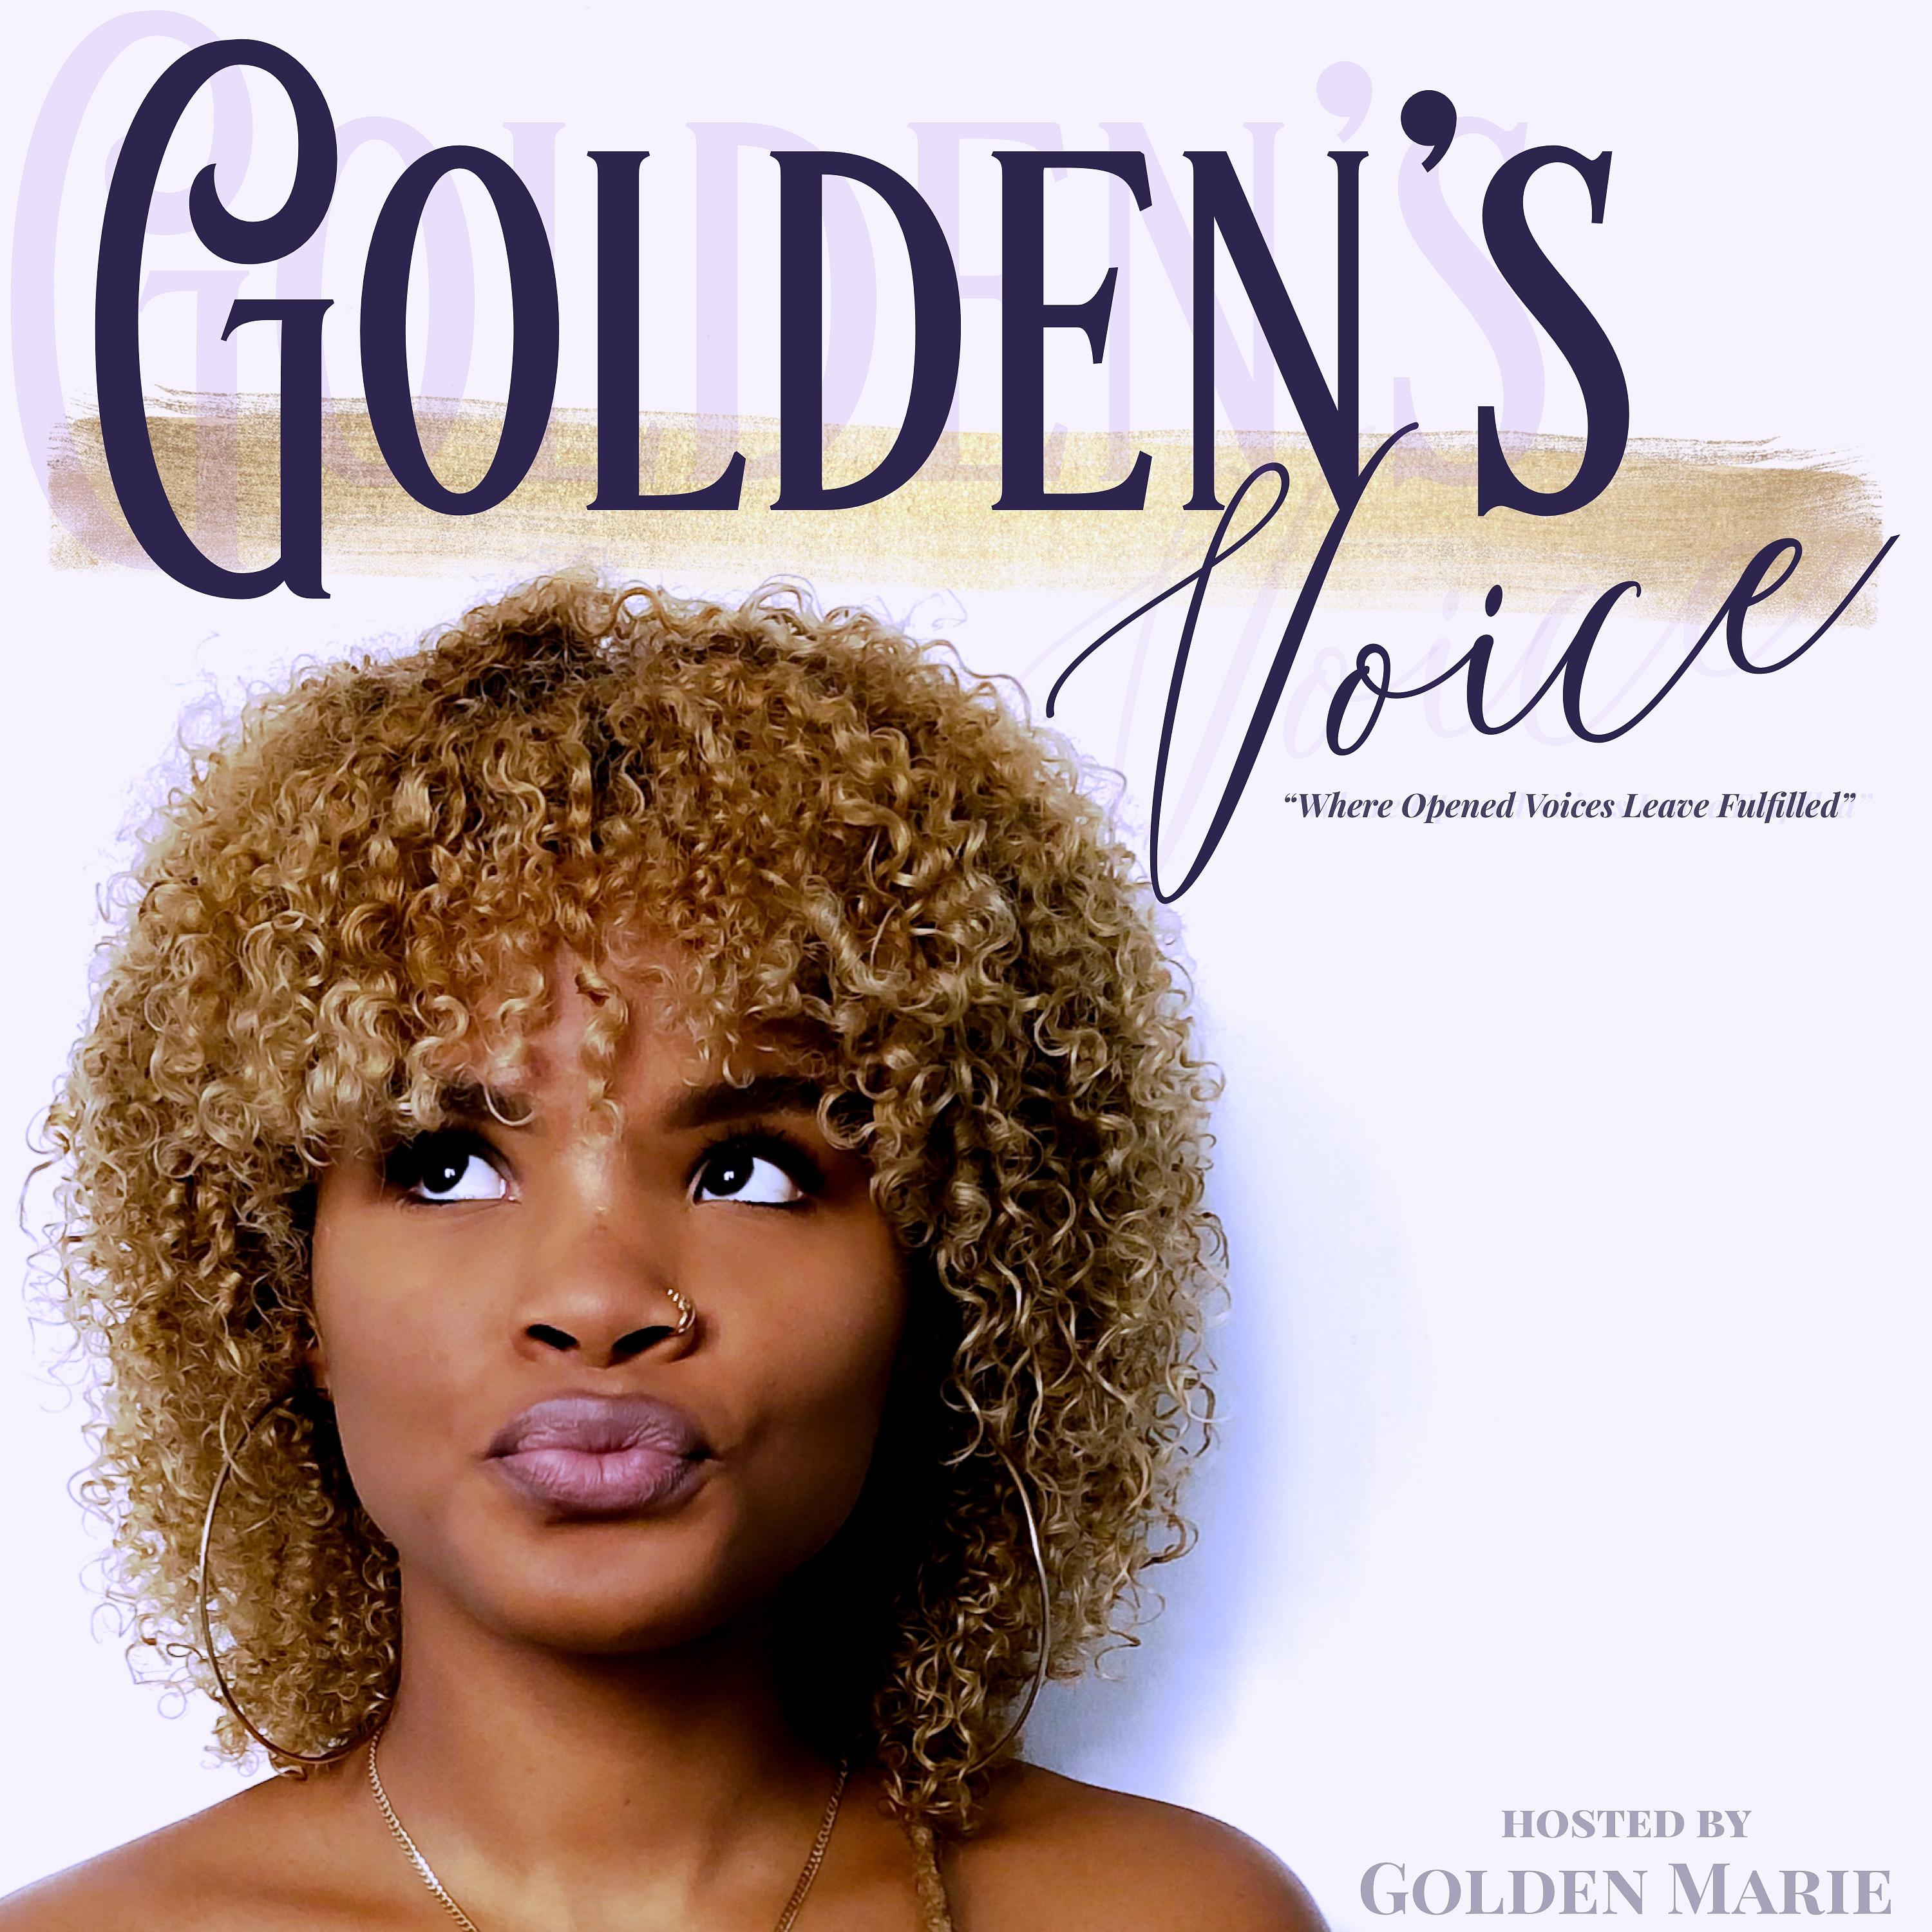 Golden’s Voice